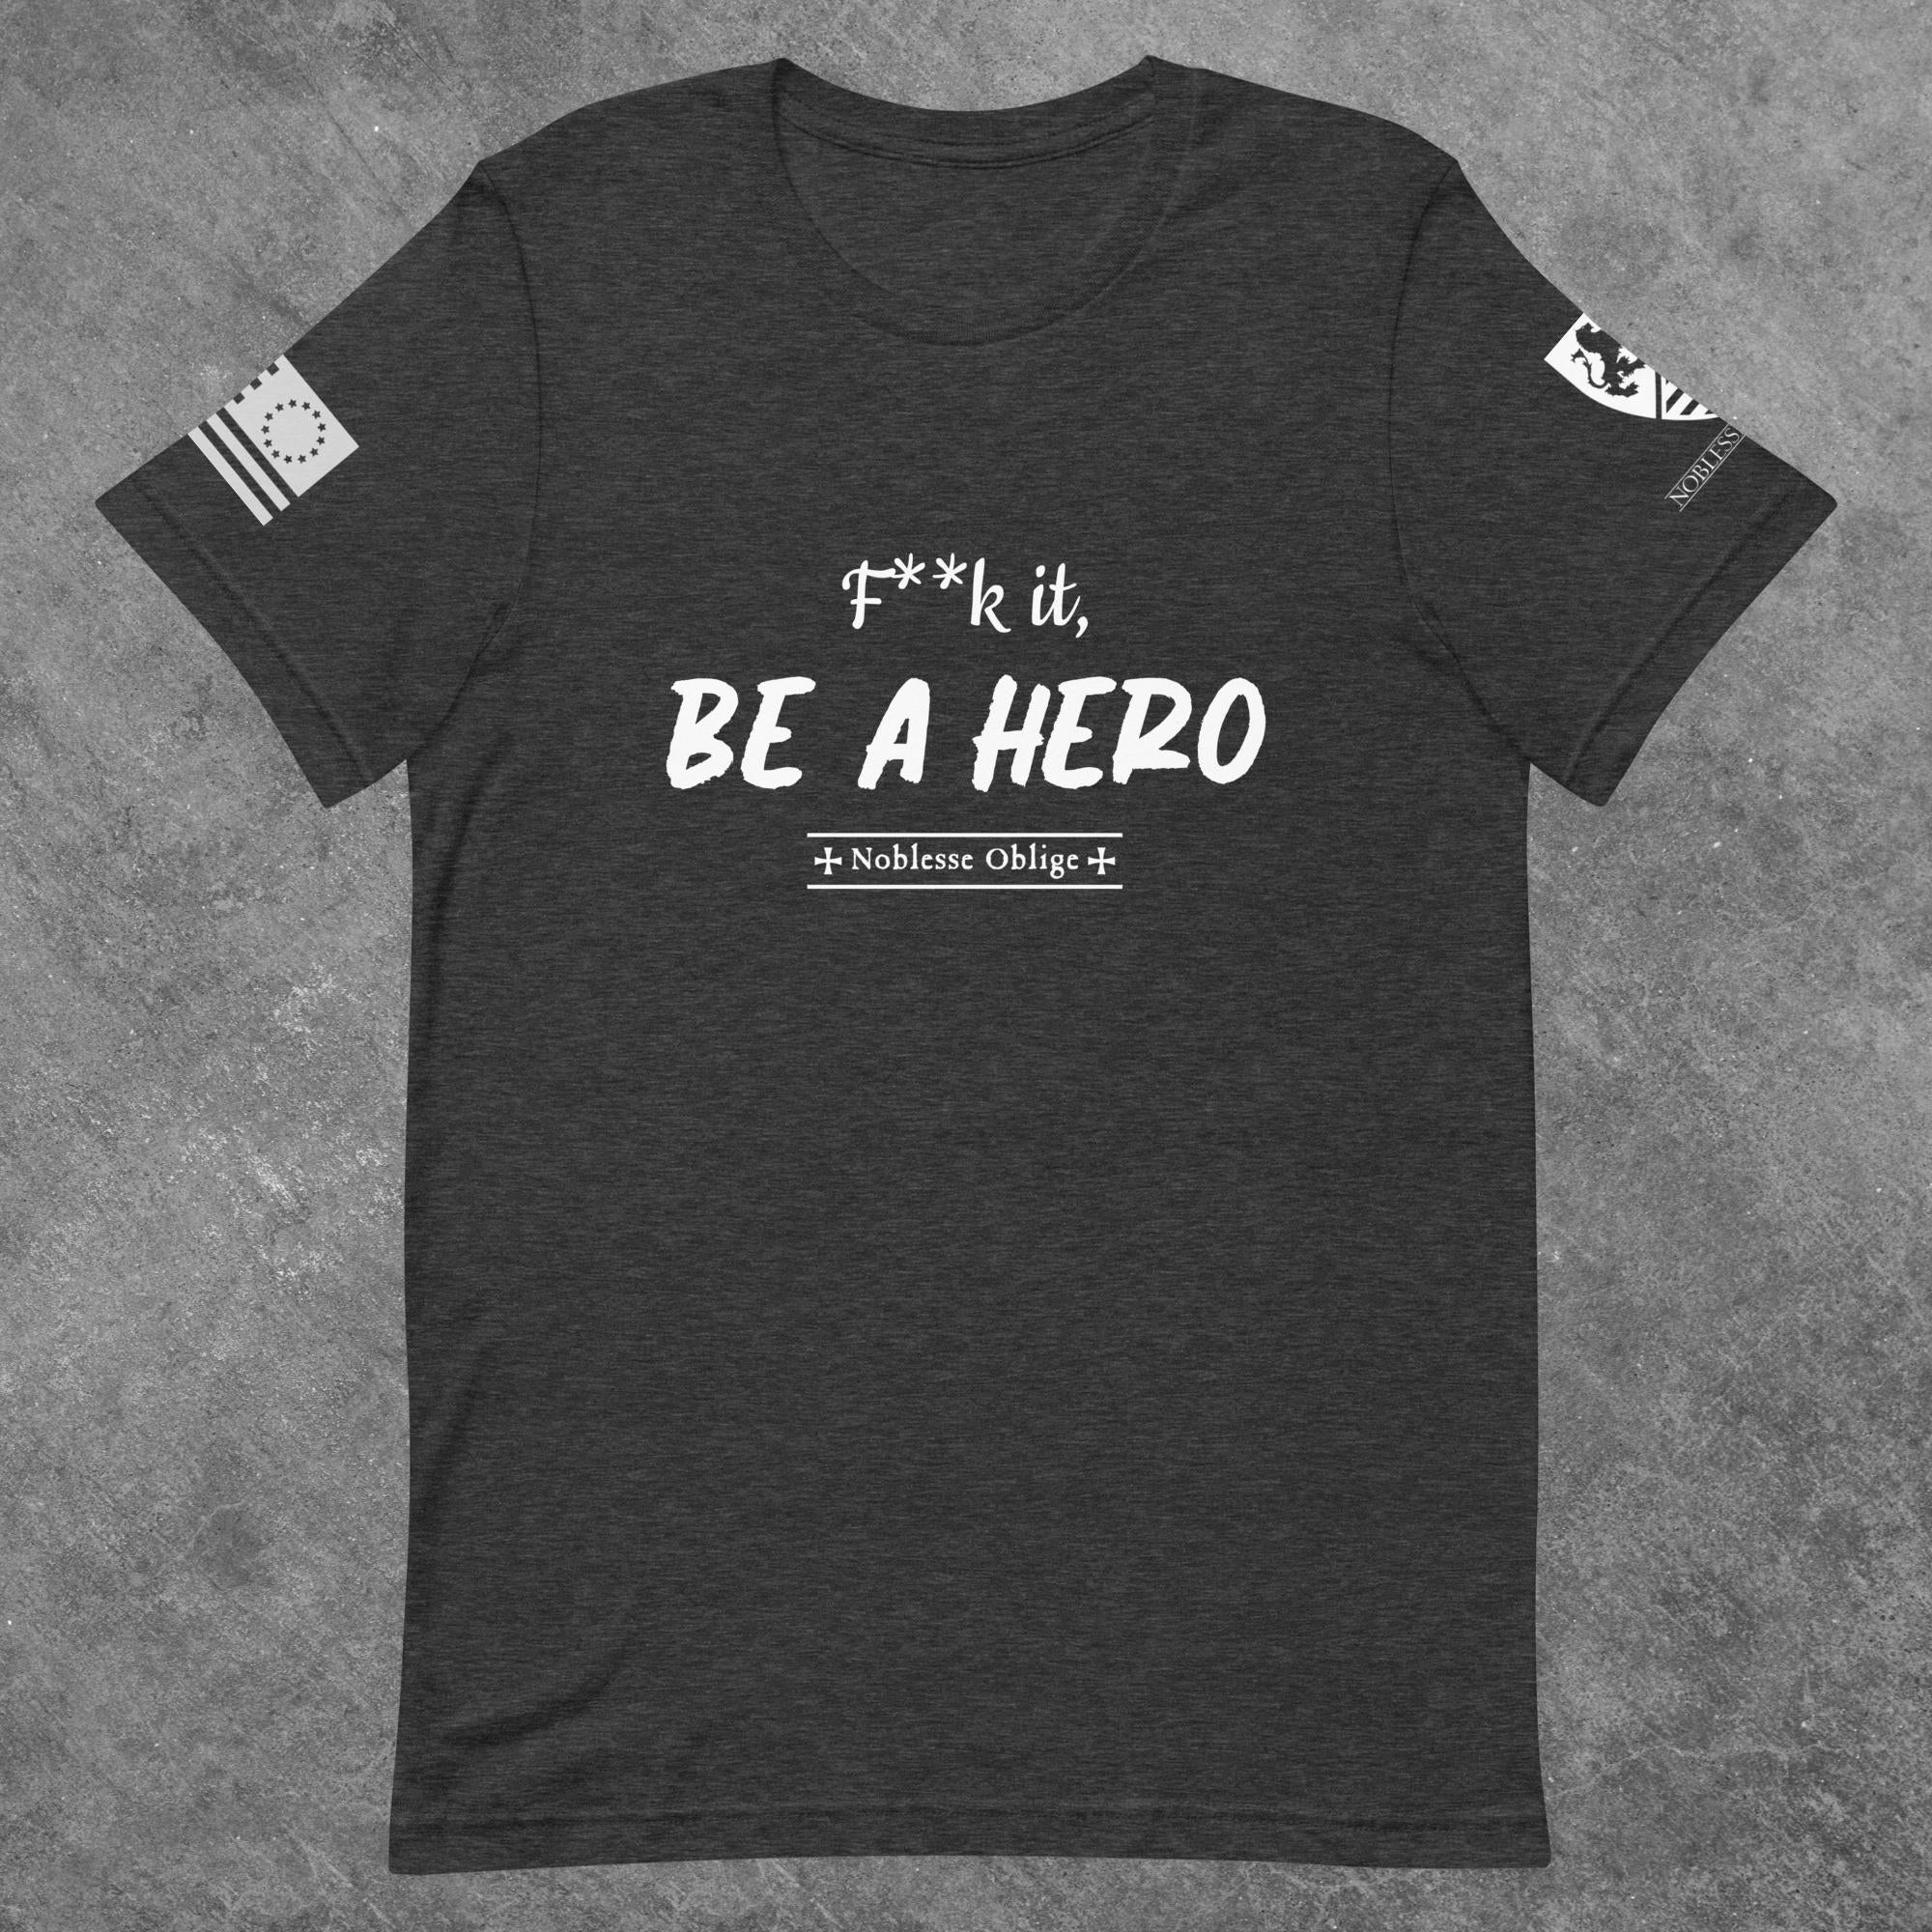 F**k it, Be a Hero - Heather Tshirt - Noblesse Oblige Apparel